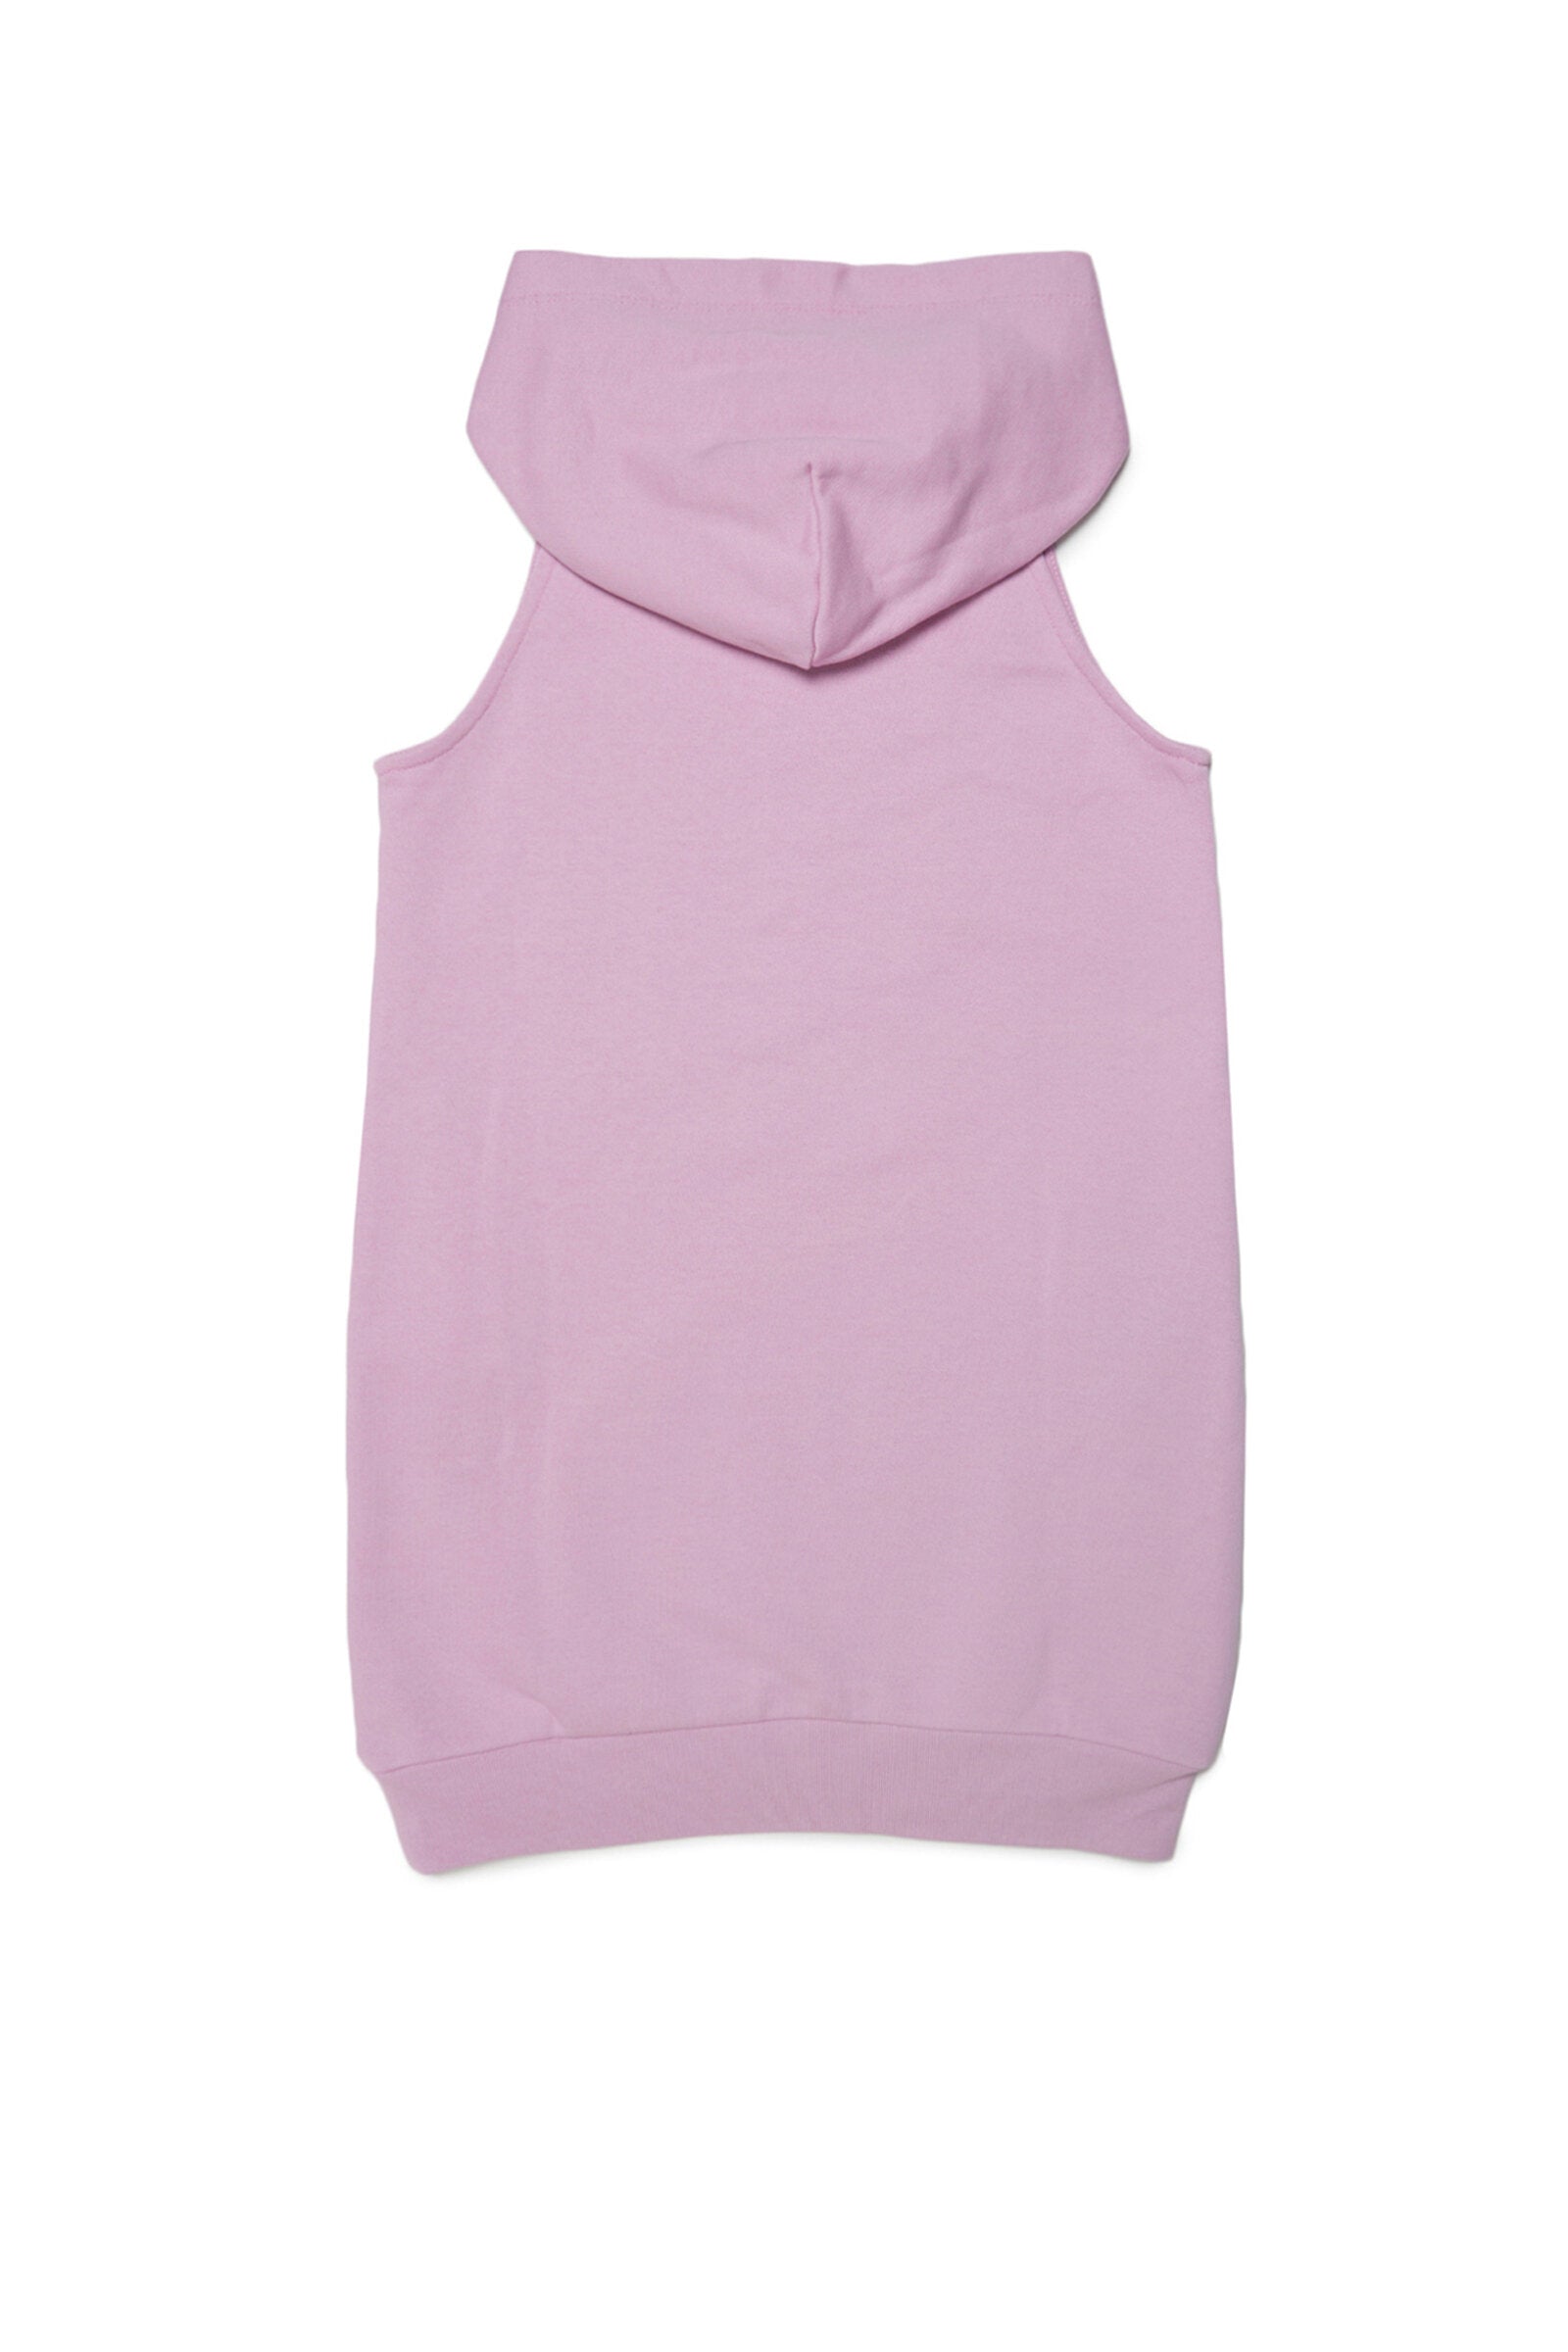 Pink sleeveless fleece dress with hood and logo